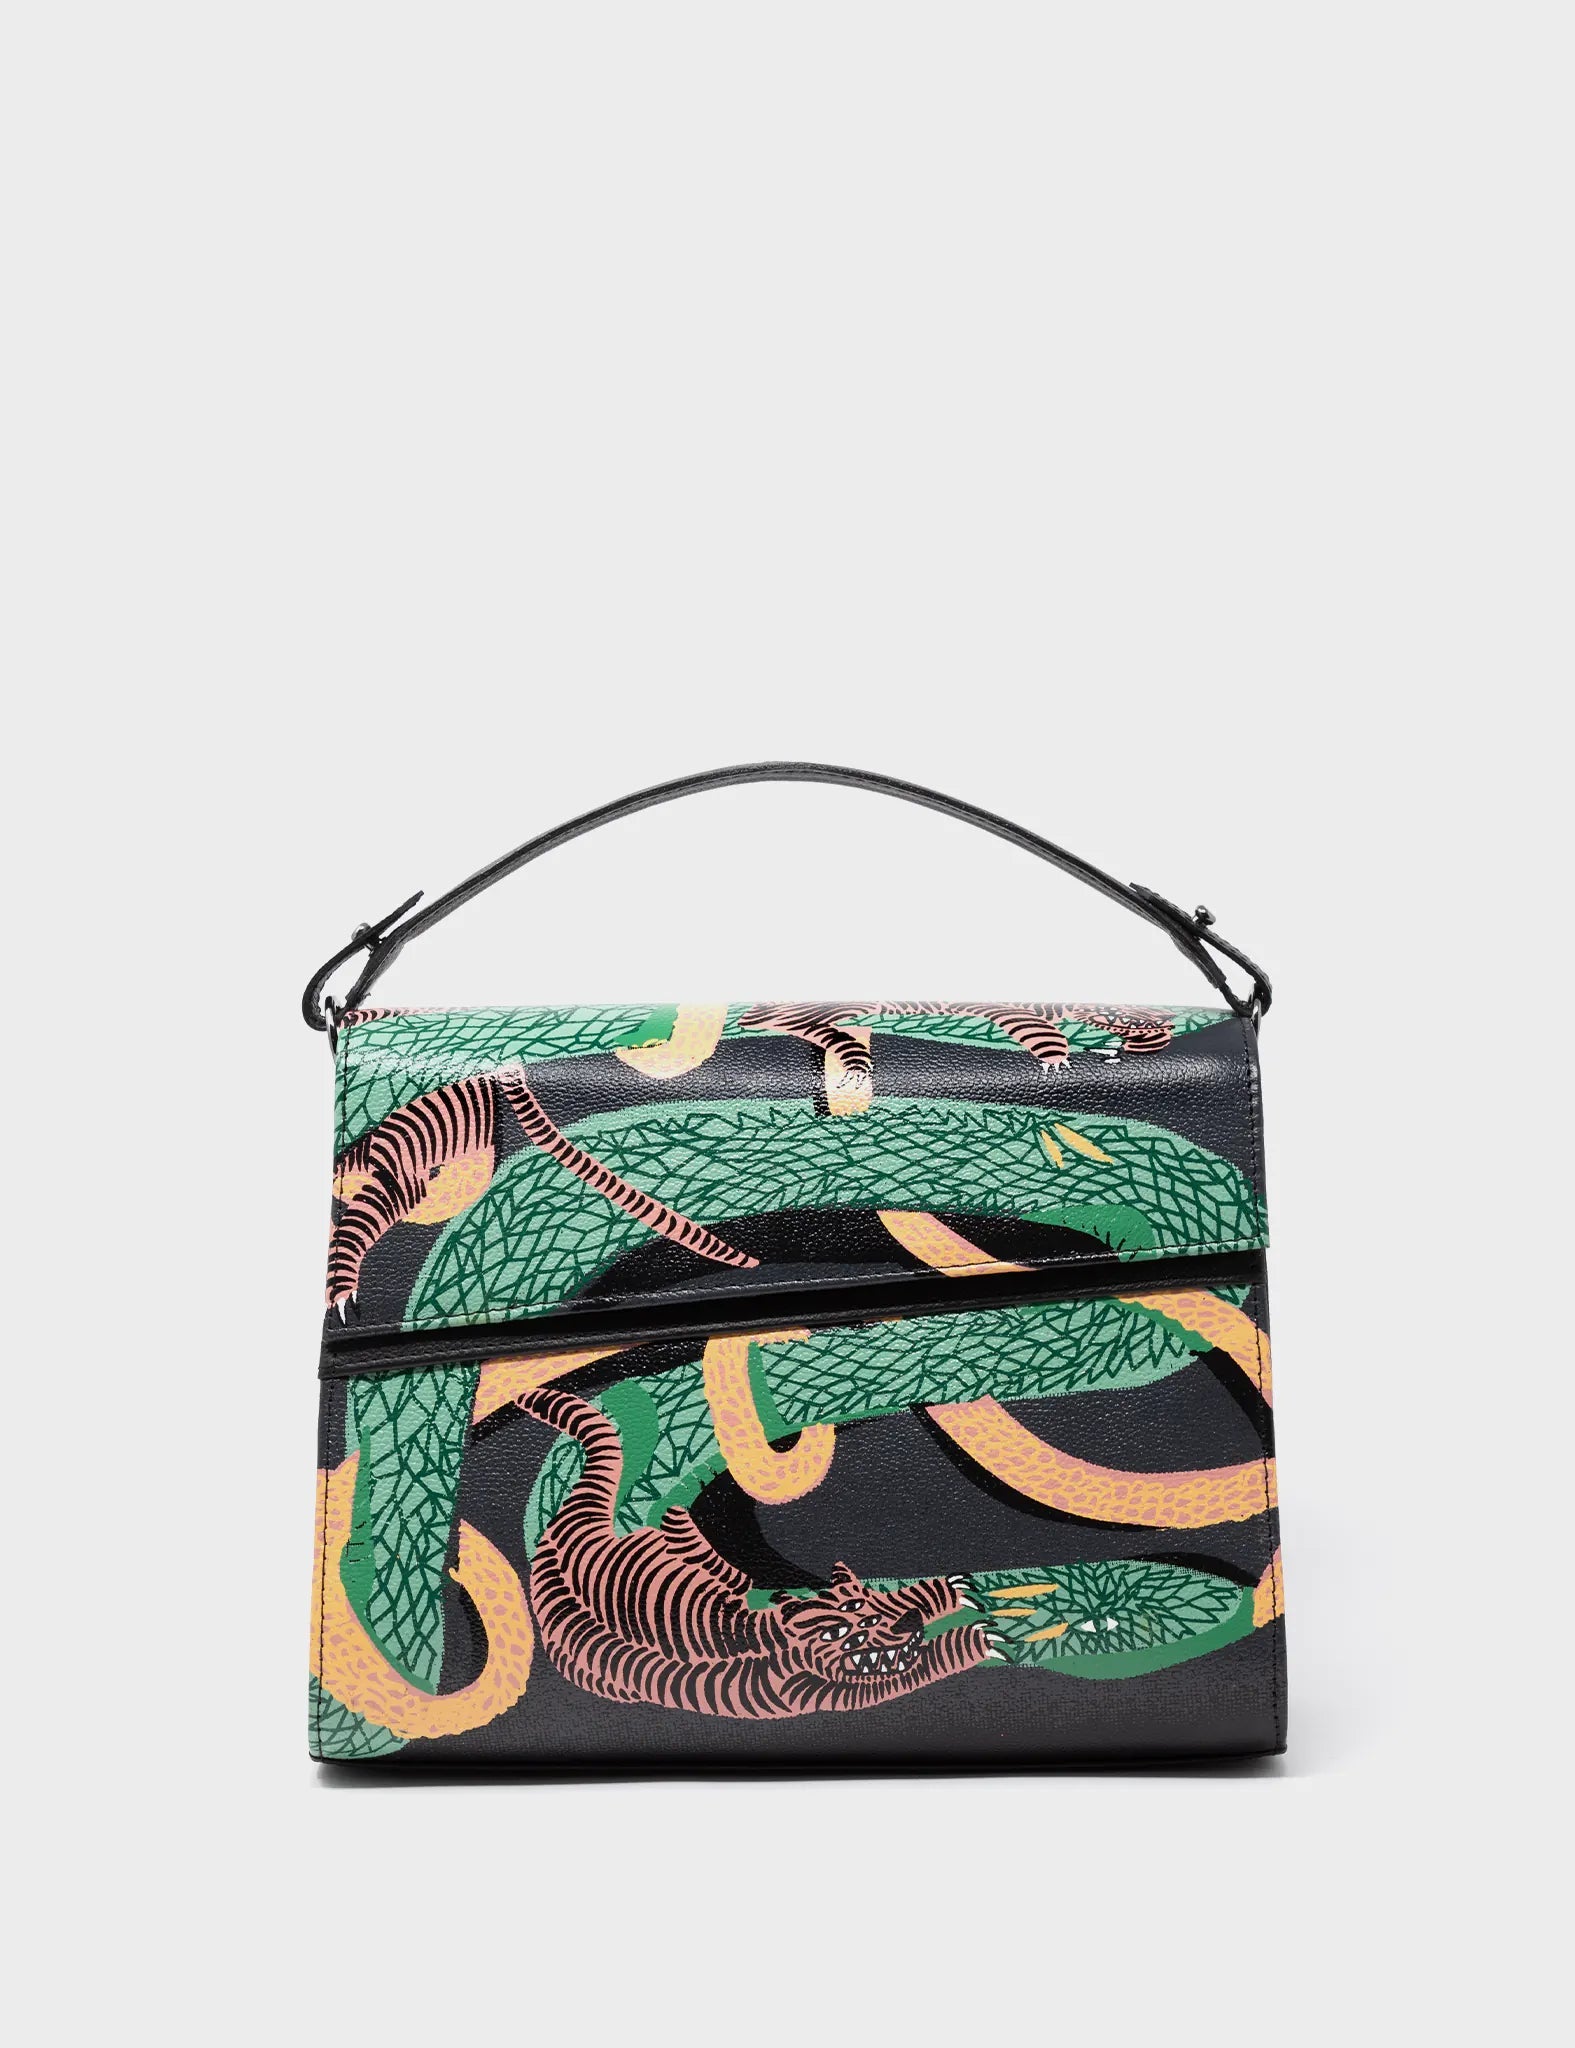 Medium Crossbody Handbag Black Leather - Tiger And Snake Print - Front view